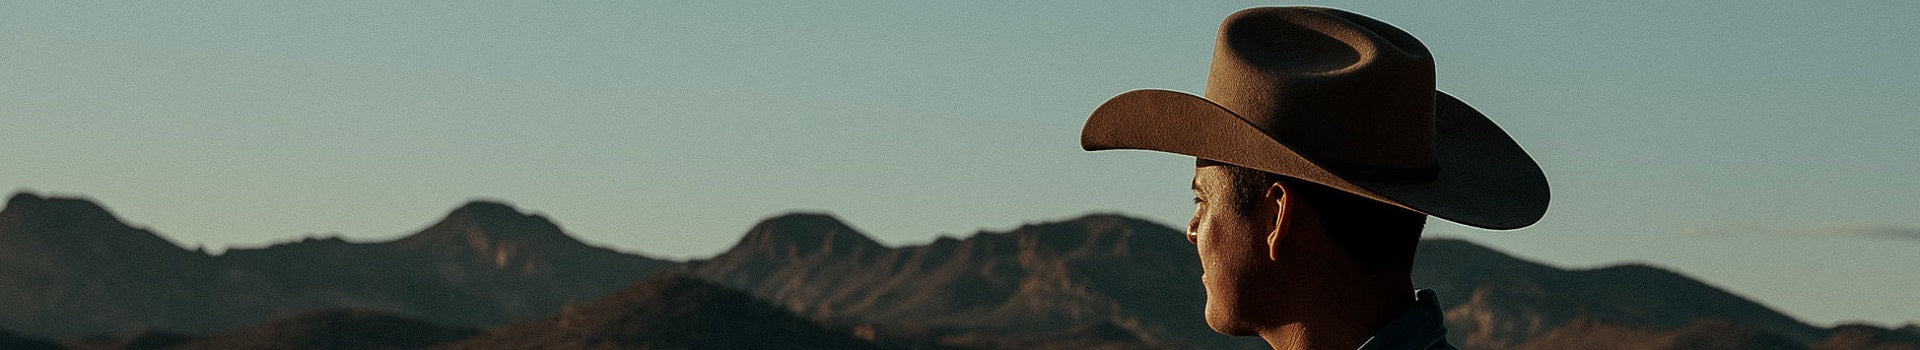 Wool Felt Cowboy Hats